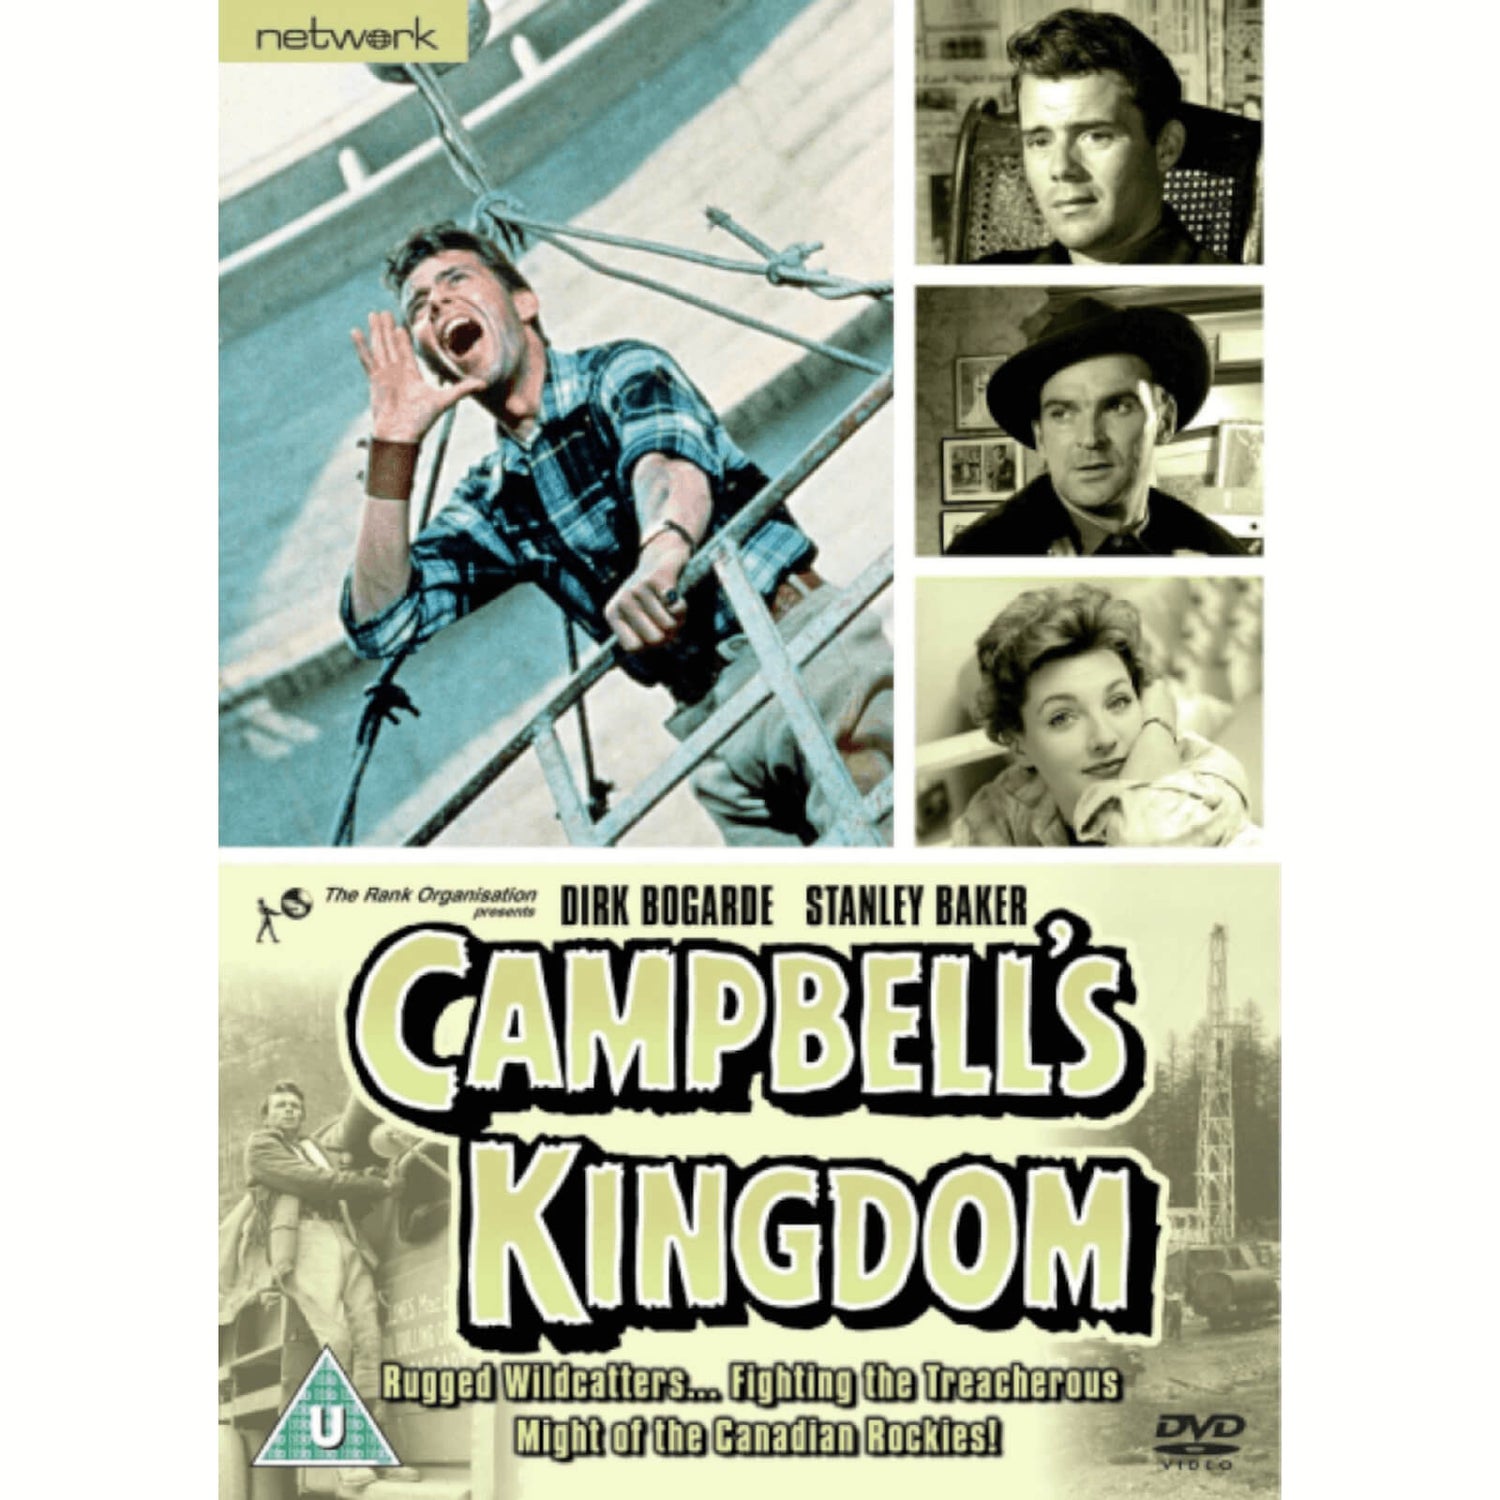 Campbell's Kingdom